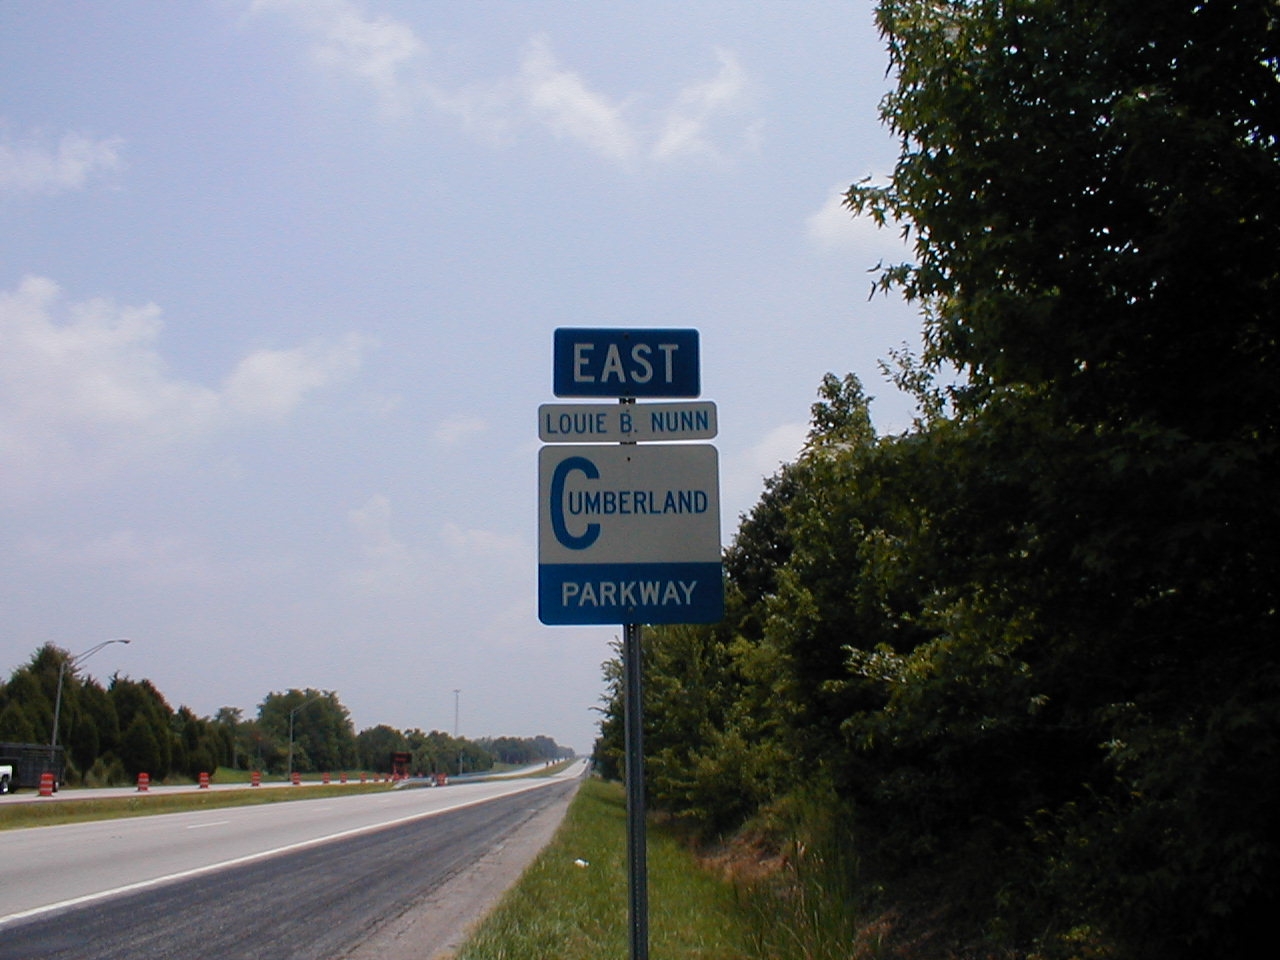 "Louie B. Nunn Cumberland Parkway" sign